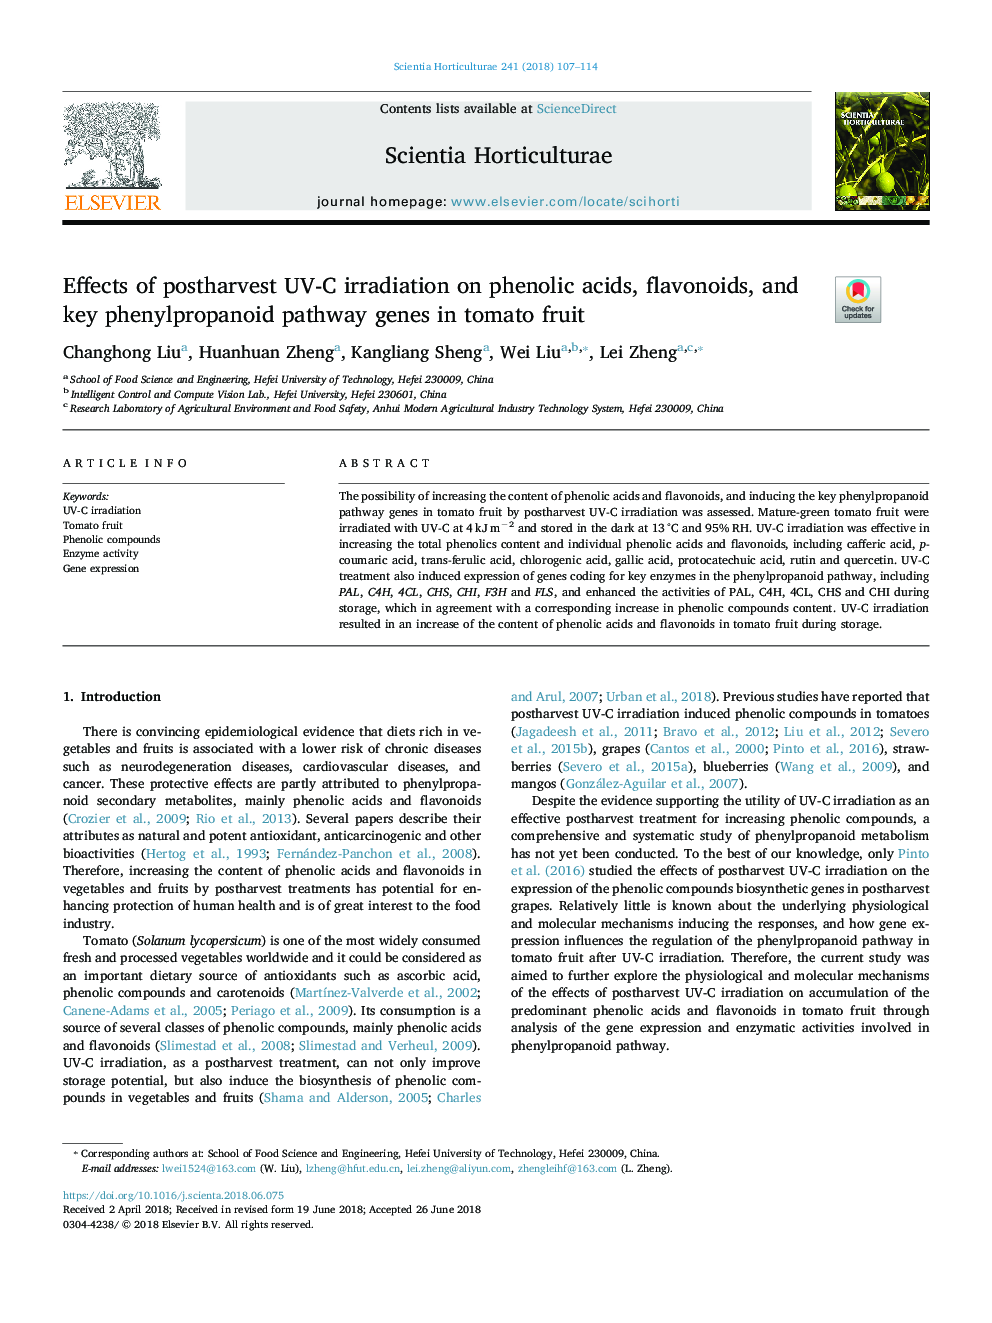 Effects of postharvest UV-C irradiation on phenolic acids, flavonoids, and key phenylpropanoid pathway genes in tomato fruit